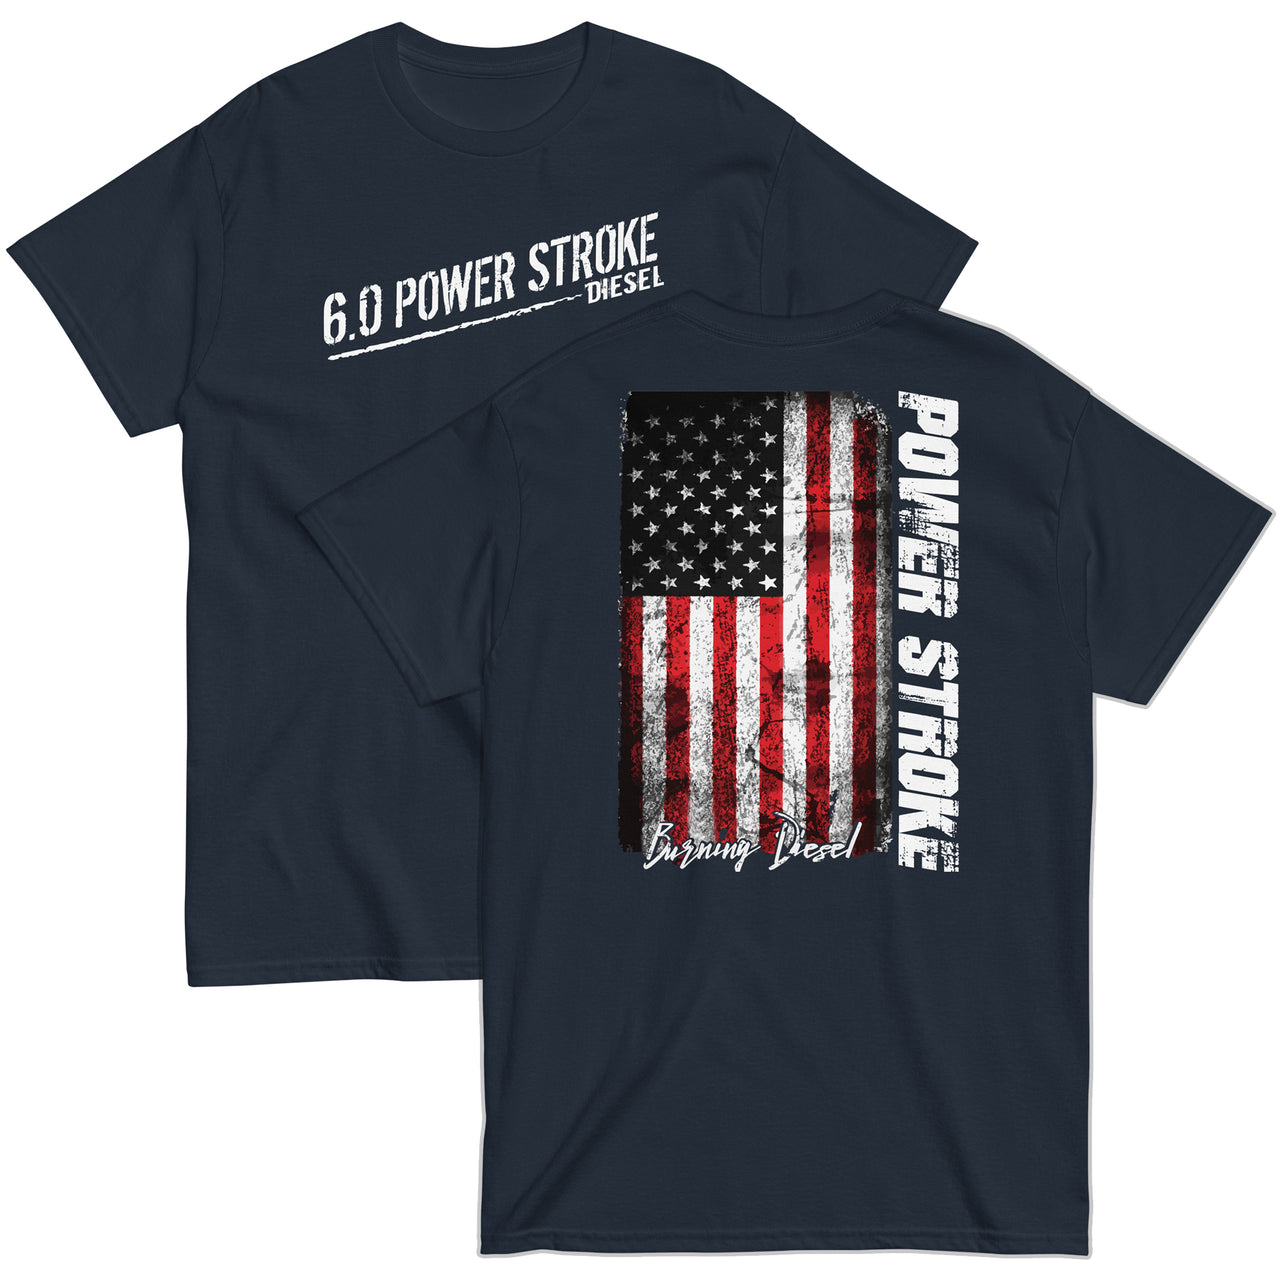 6.0 Powerstroke American Flag T-Shirt in navy